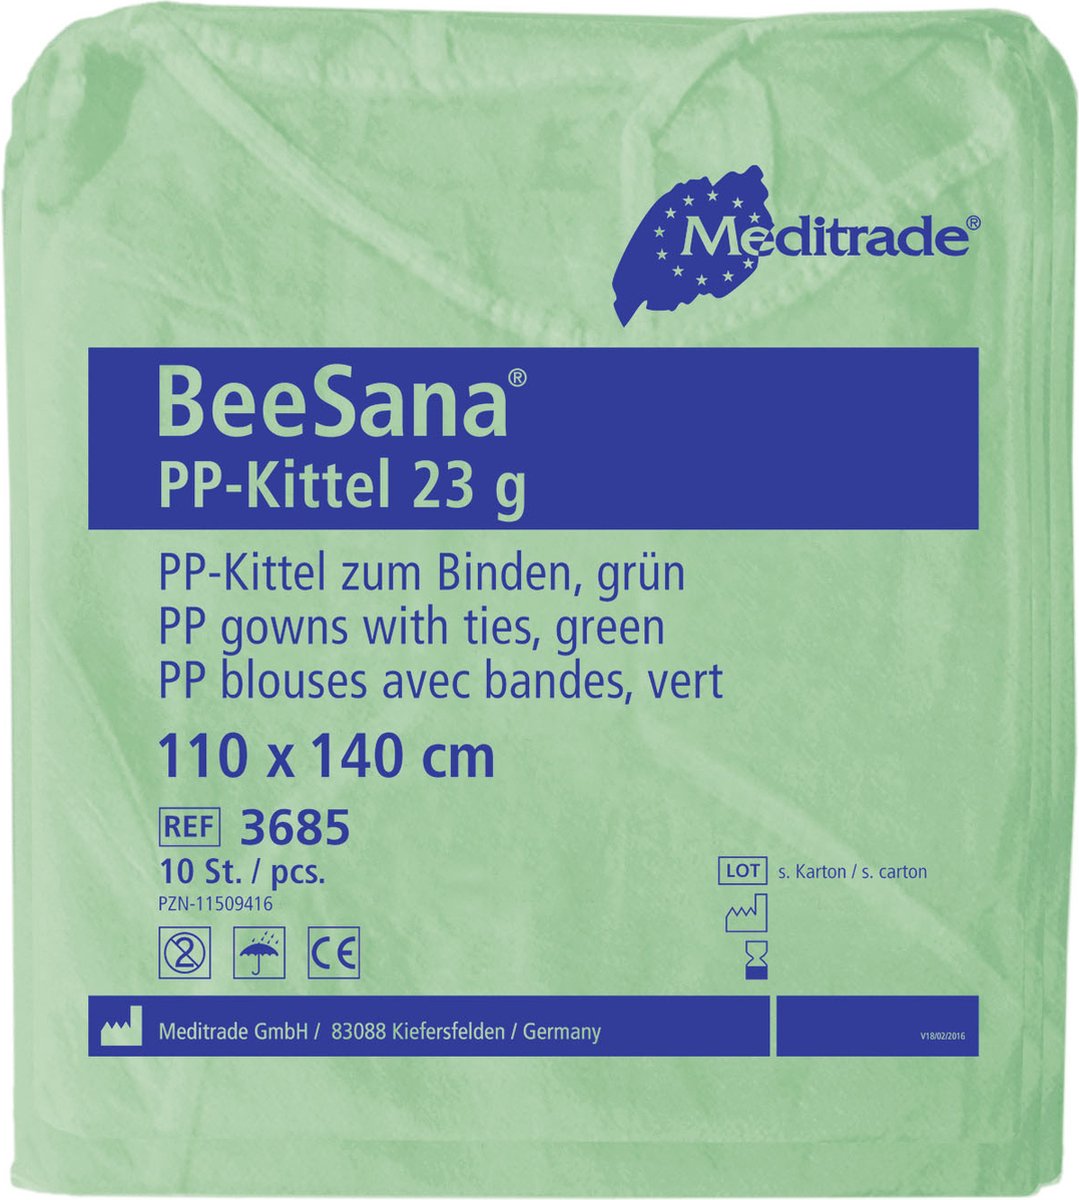 Meditrade 3685 Beesana Pp-schort, 110cmx140cm Groen per 10 stuks verpakt